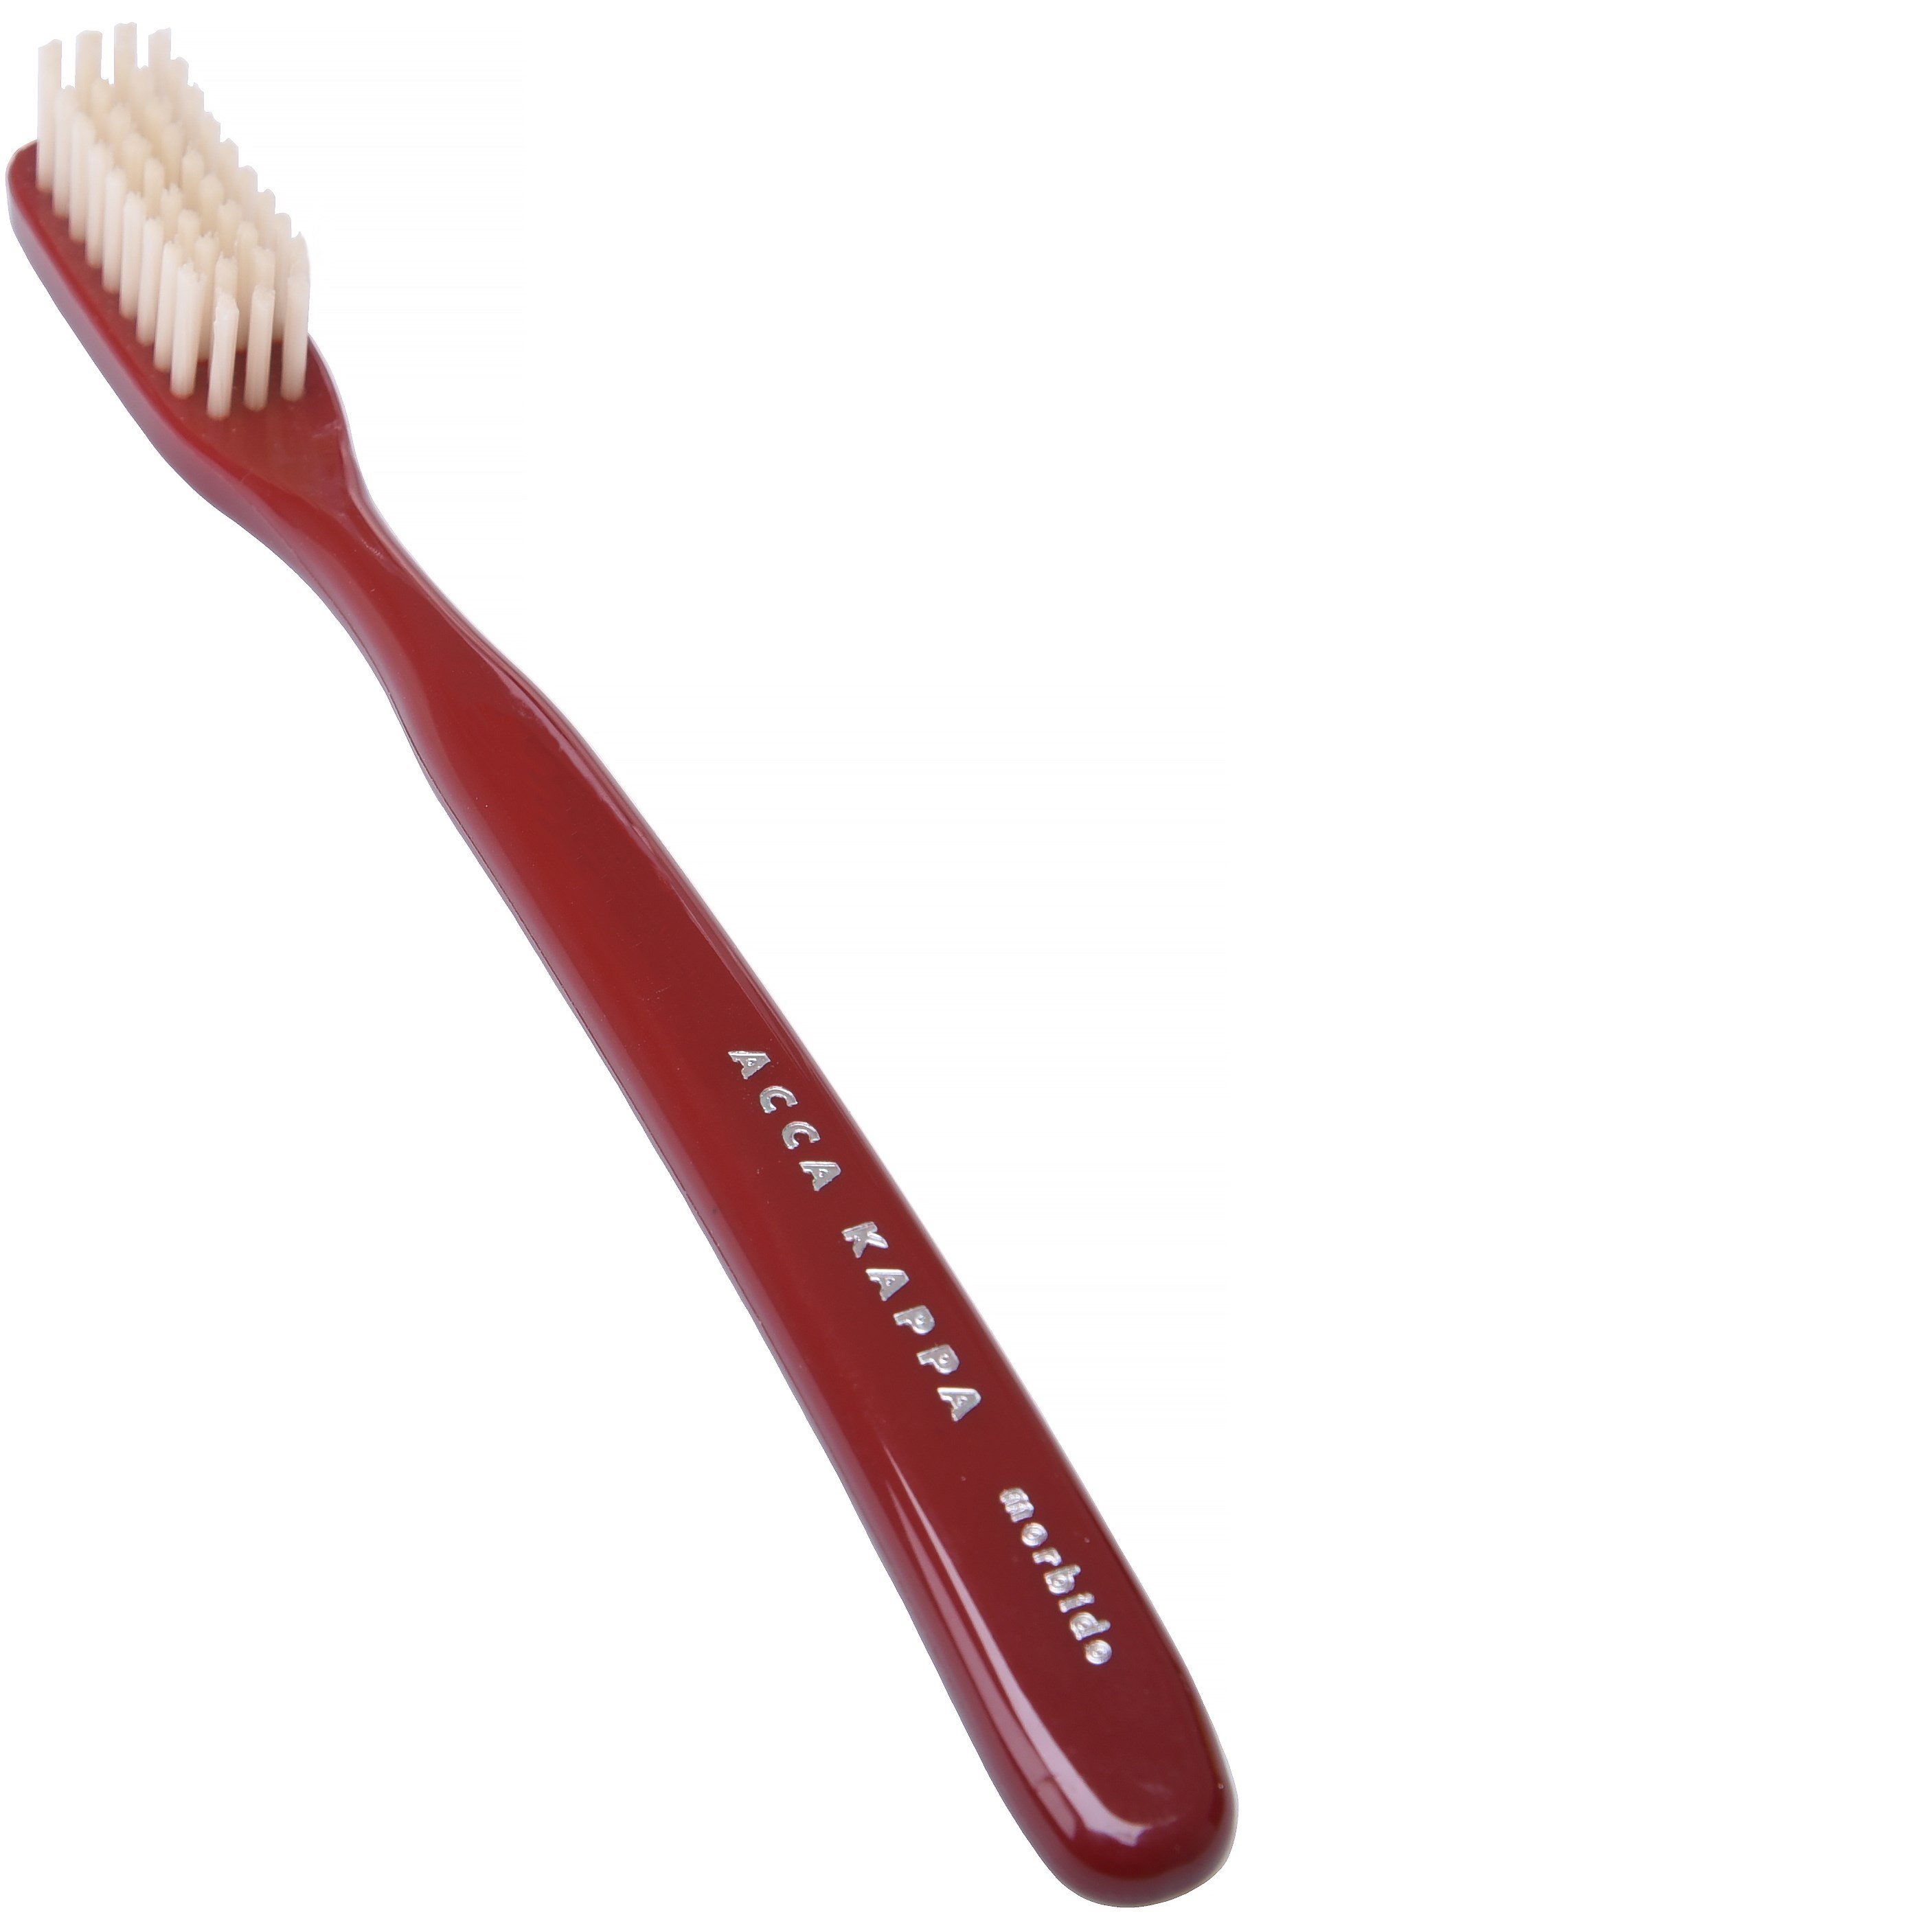 Bilde av Acca Kappa Tooth Brush Vintage Soft Nylon Bristles Red